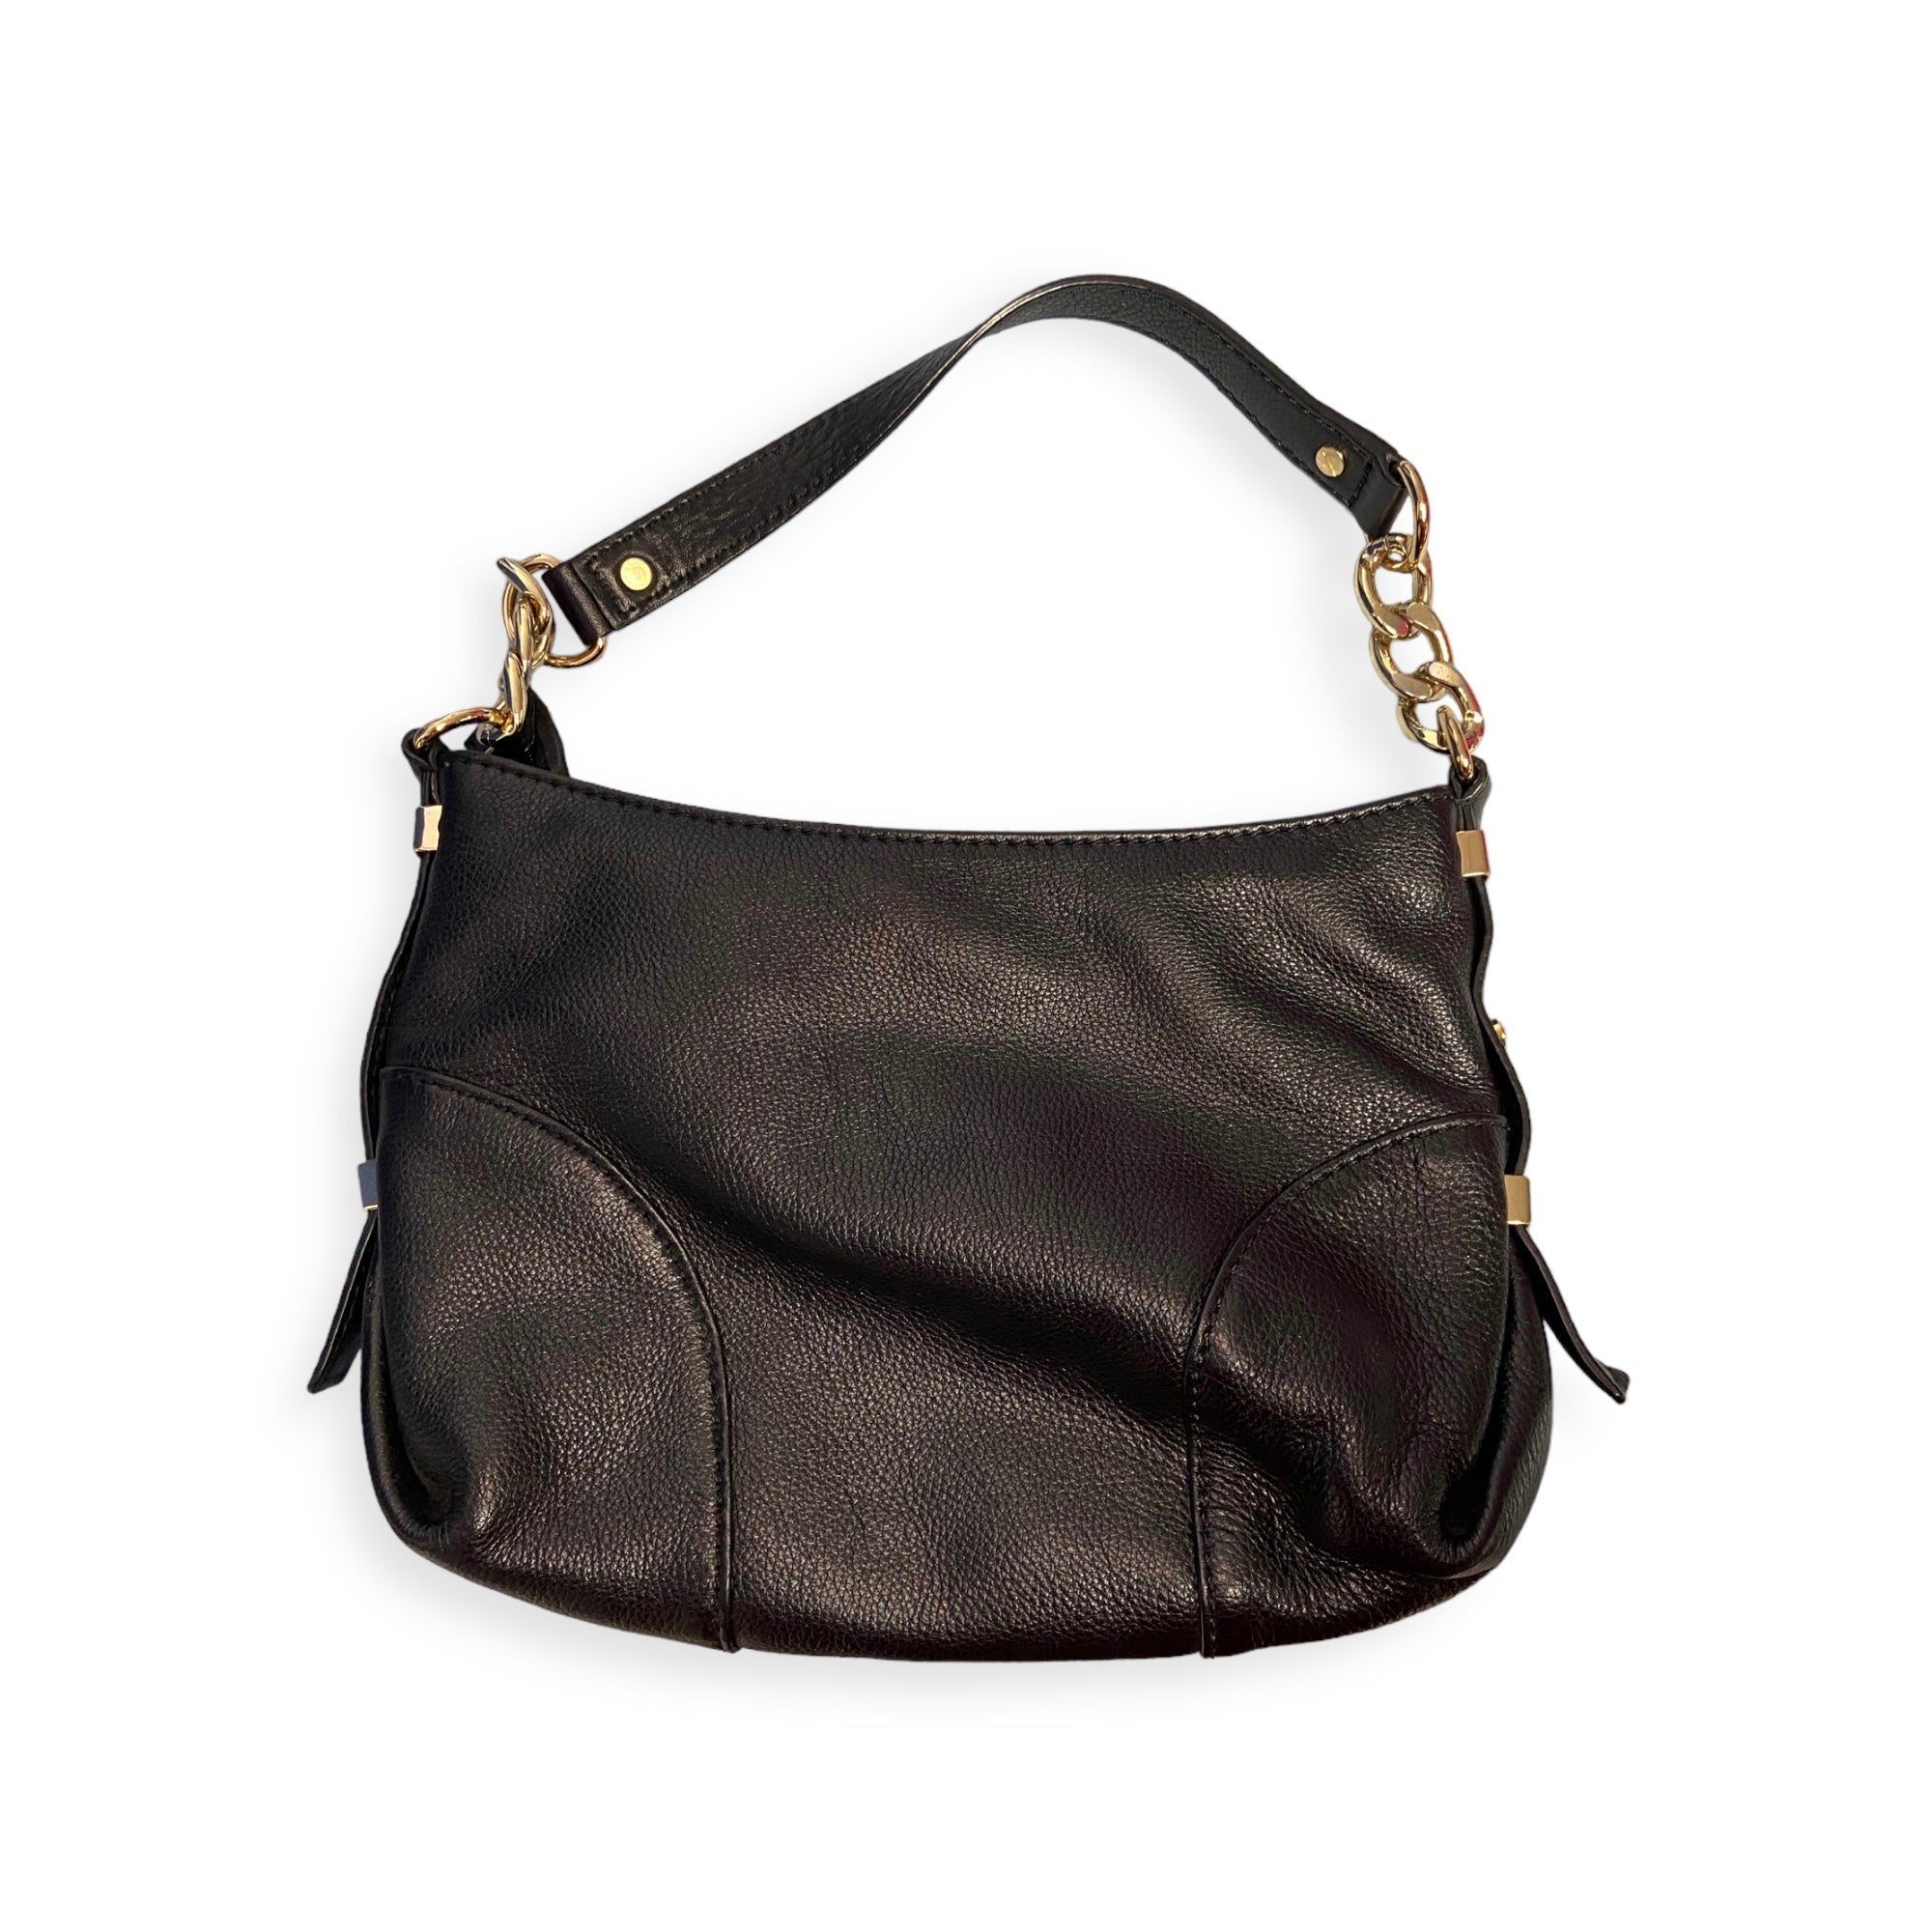 Michael Kors Handbags | Wallets, Totes & Crossbody Bags - McElhinneys